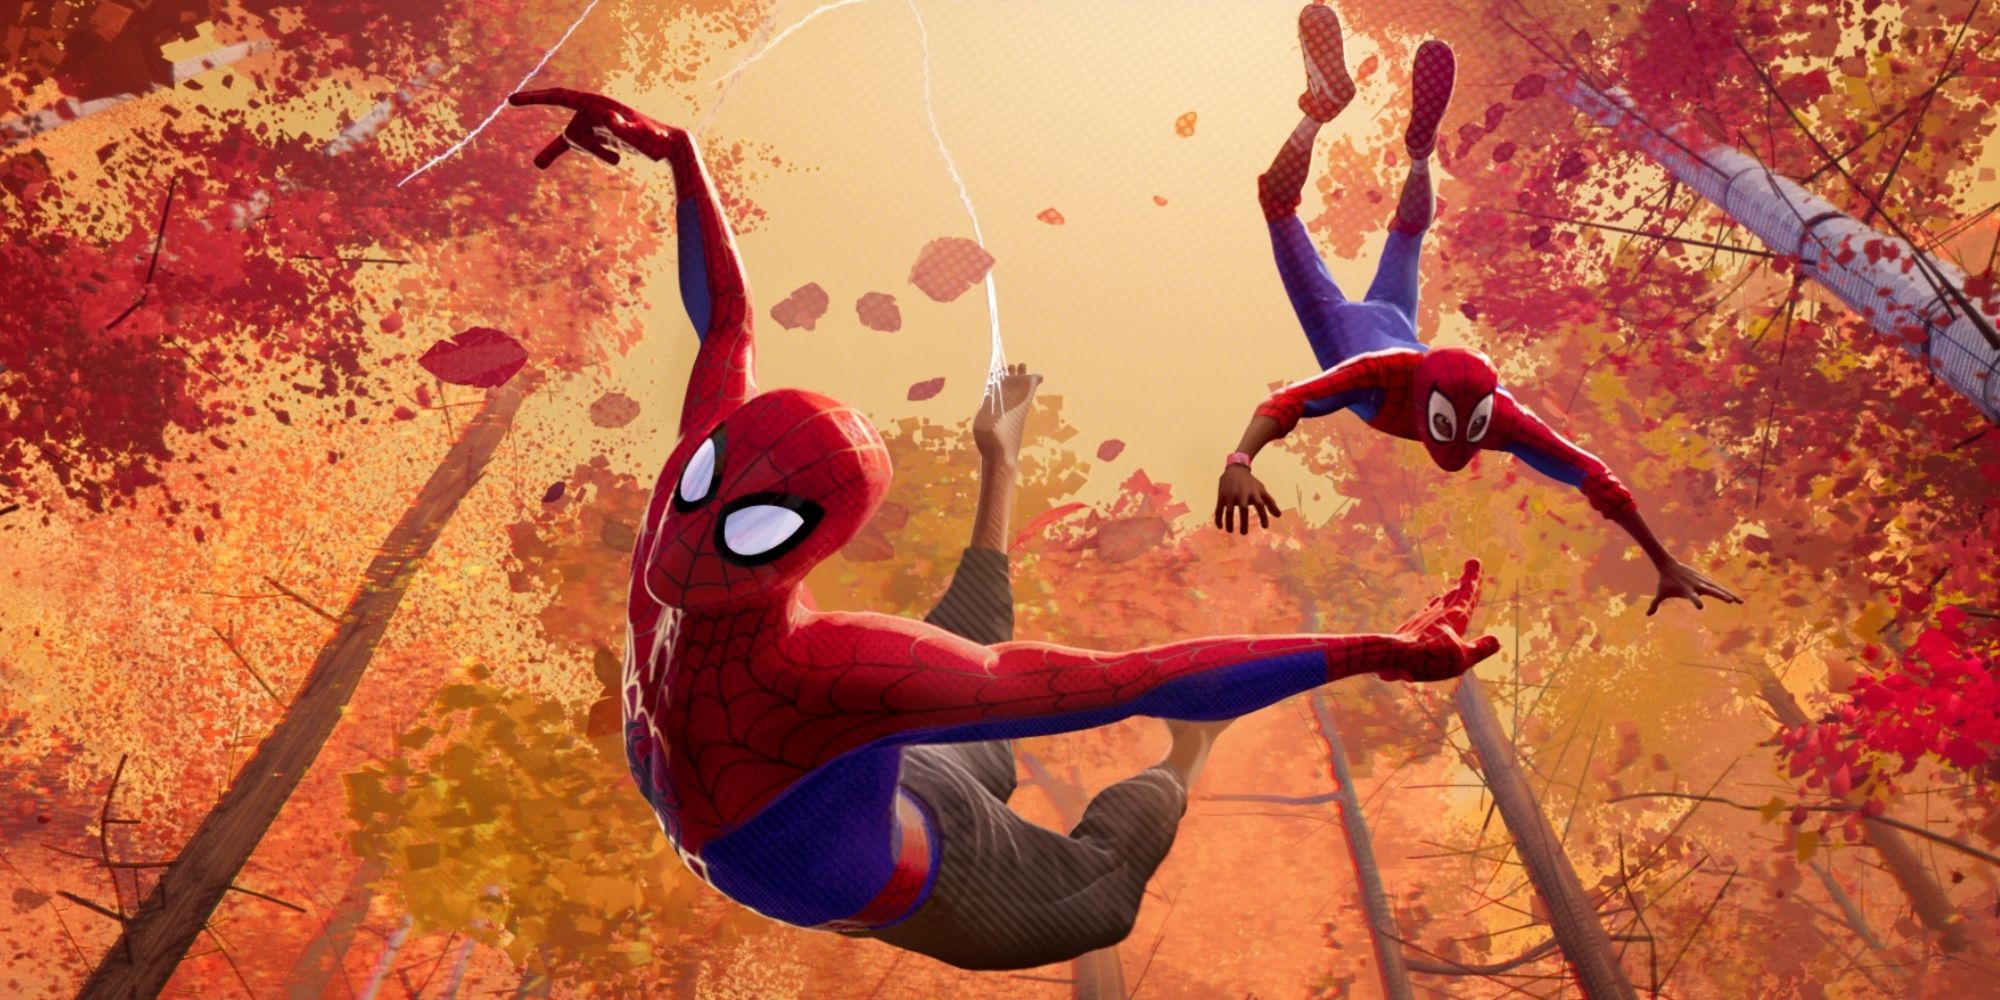 Peter B. Parker et Miles Morales se balançant dans la forêt dans 'Spider-Man : Into the Spider-Verse'.